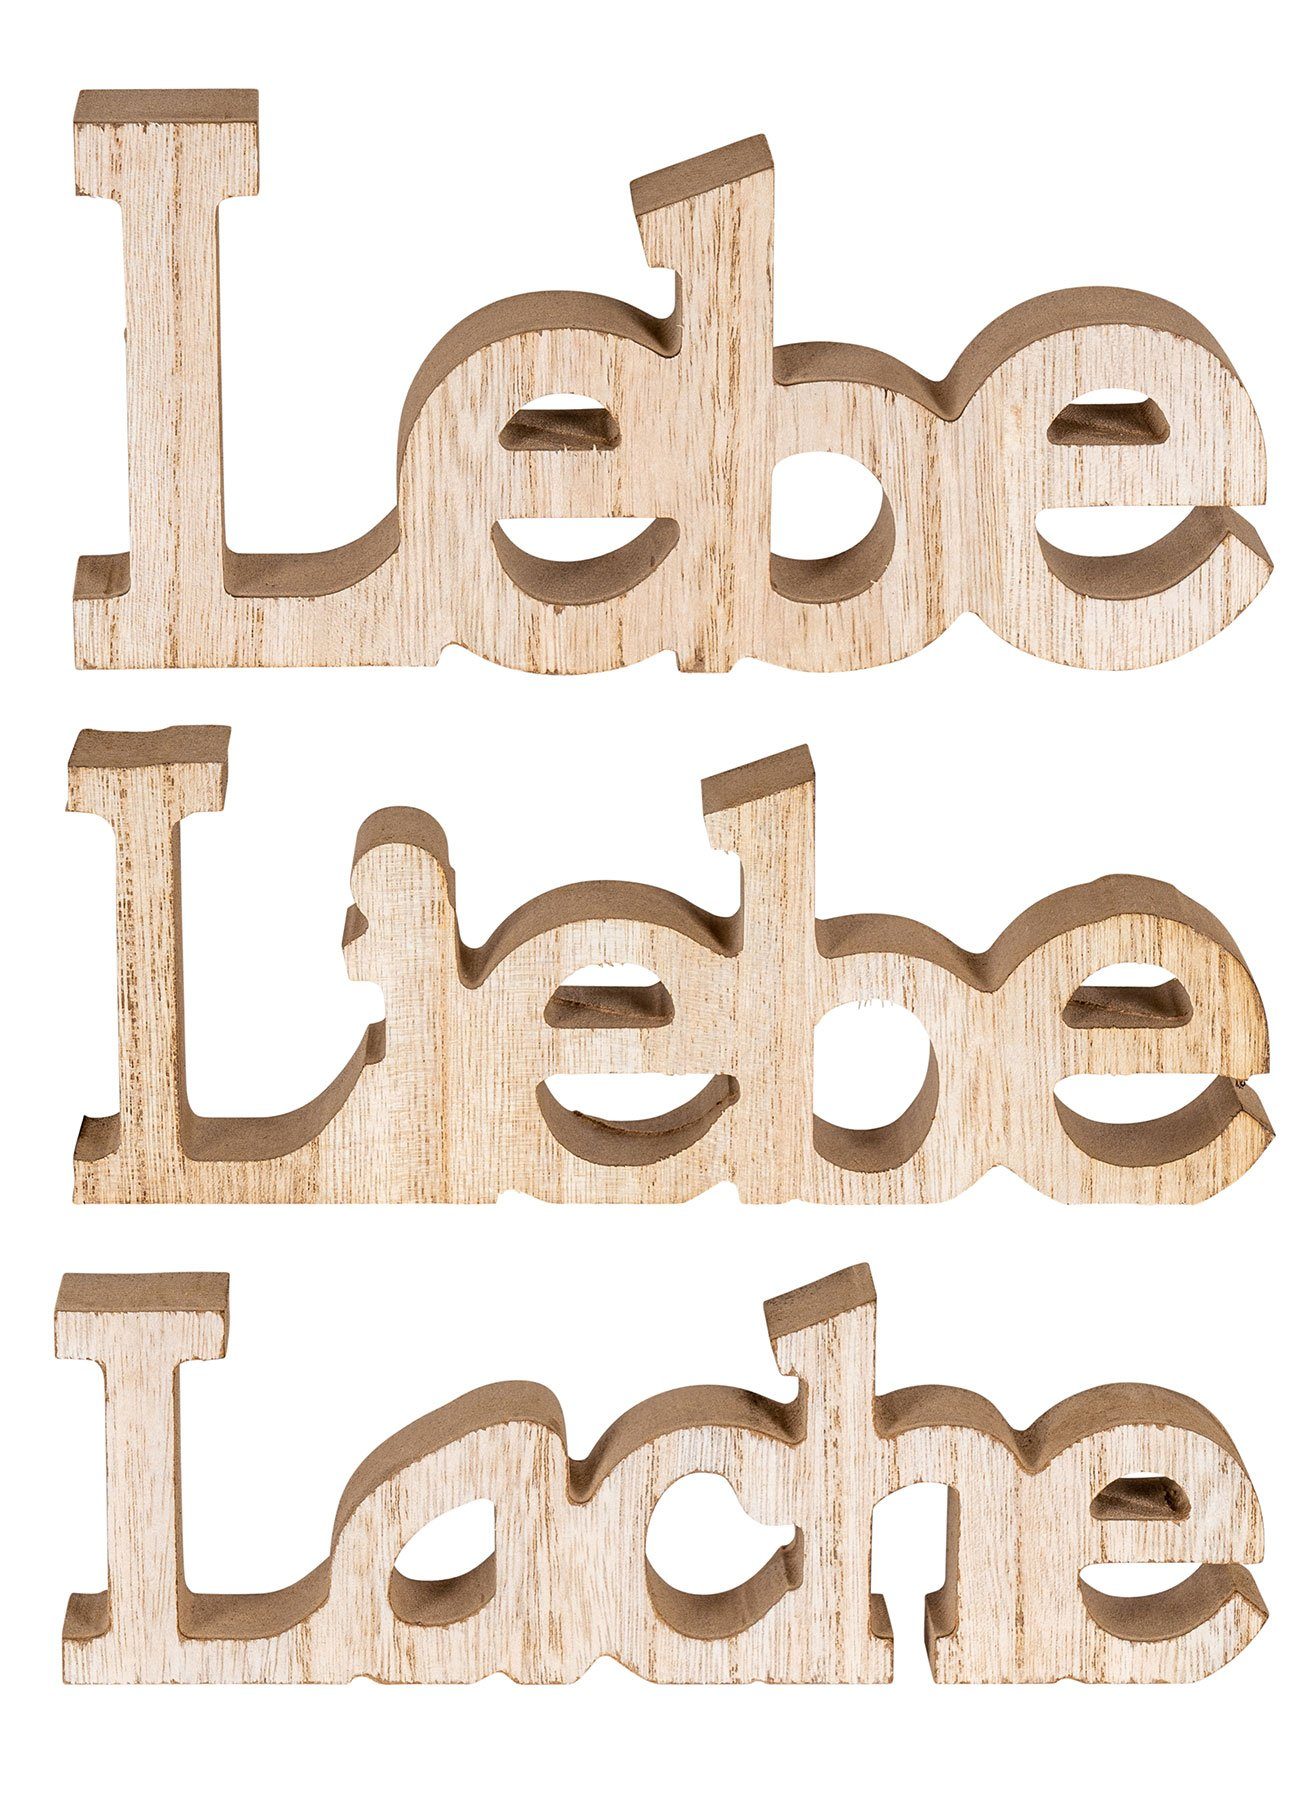 Lebe Braun Levandeo® Deko Liebe Aufsteller 3er Holz Schriftzug Lache Set Deko-Schriftzug,